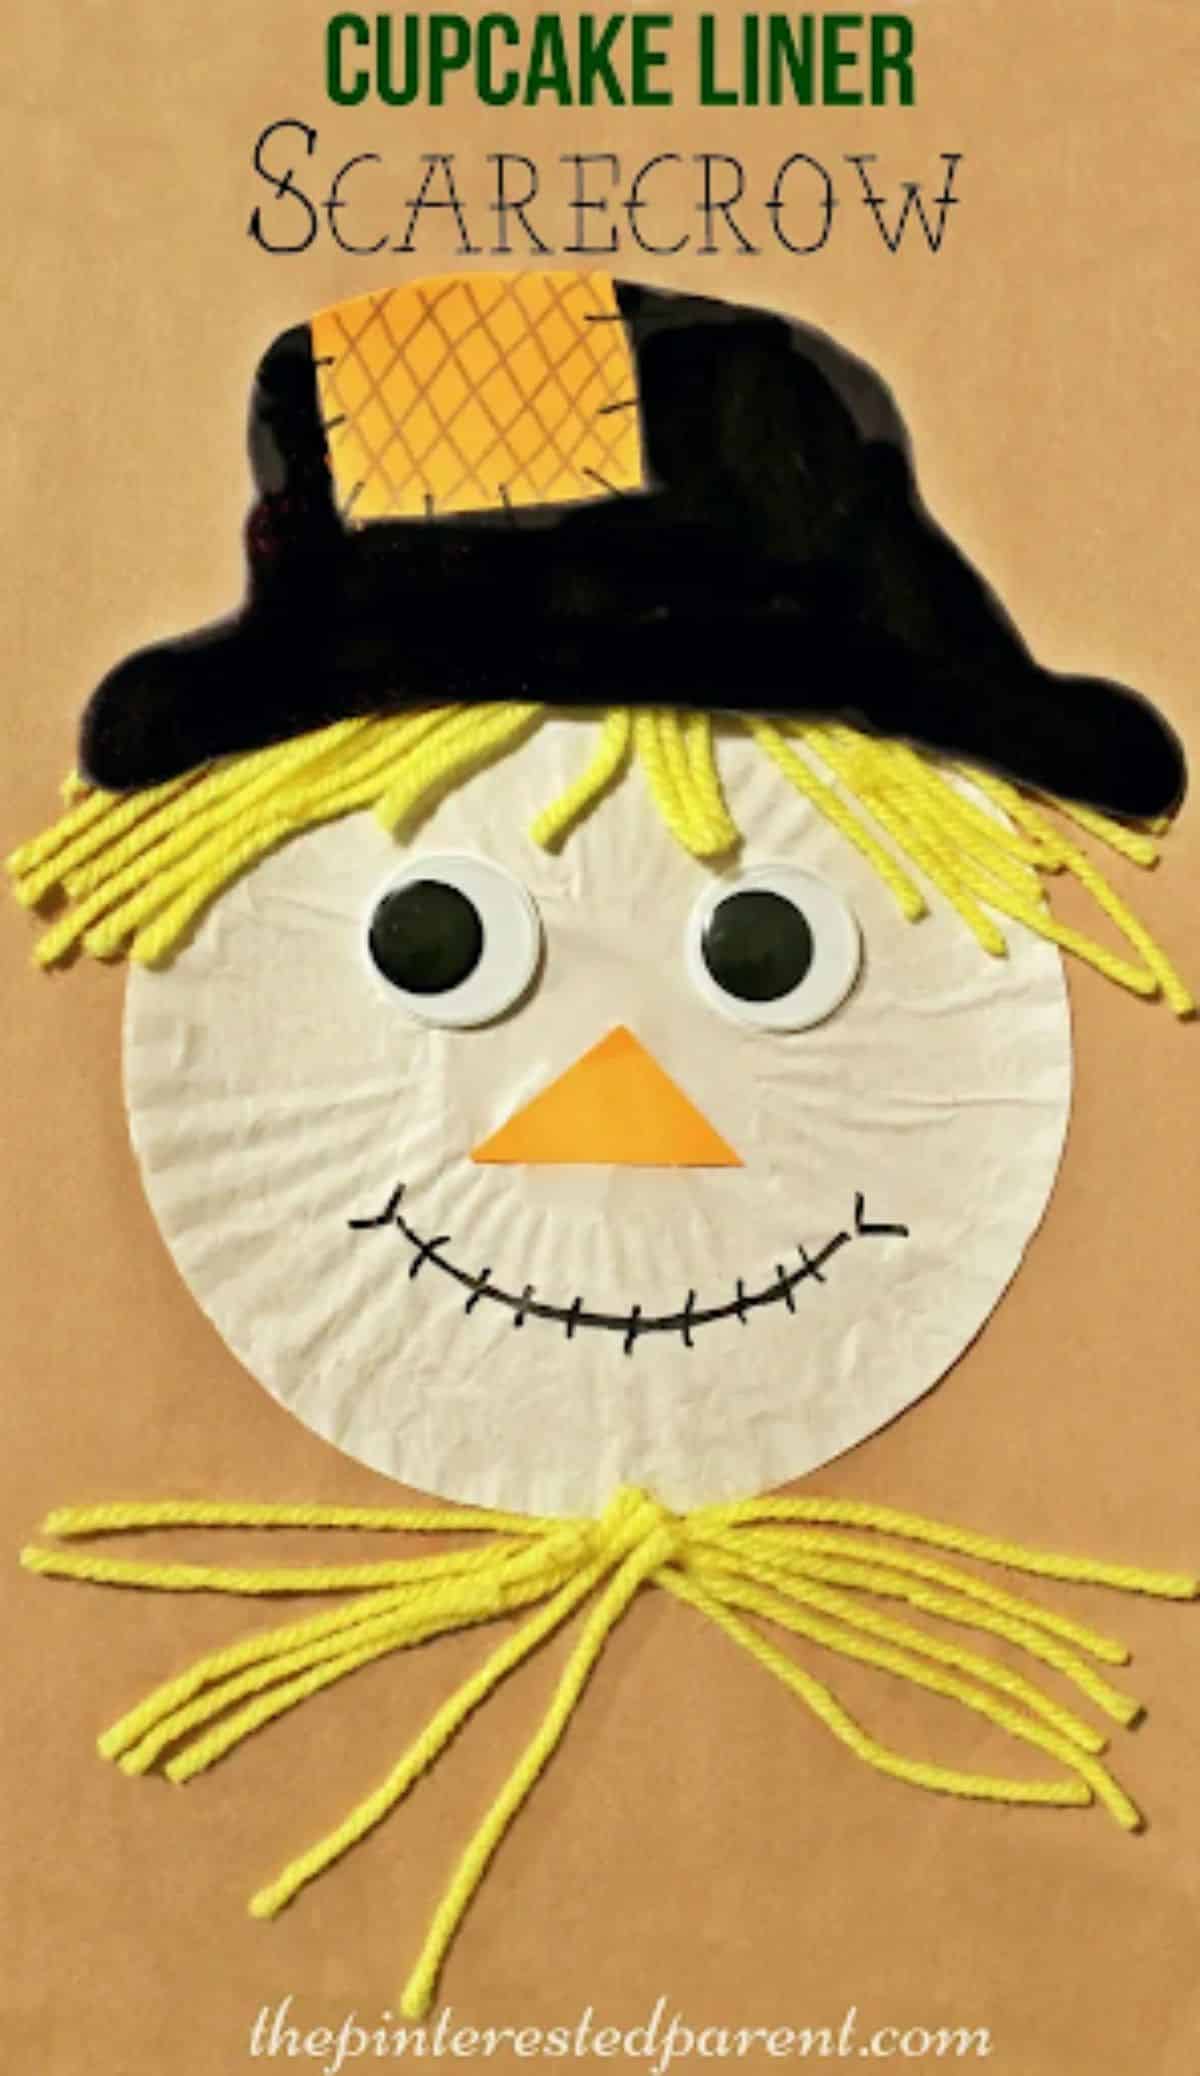 Cupcake Liner Scarecrow Face